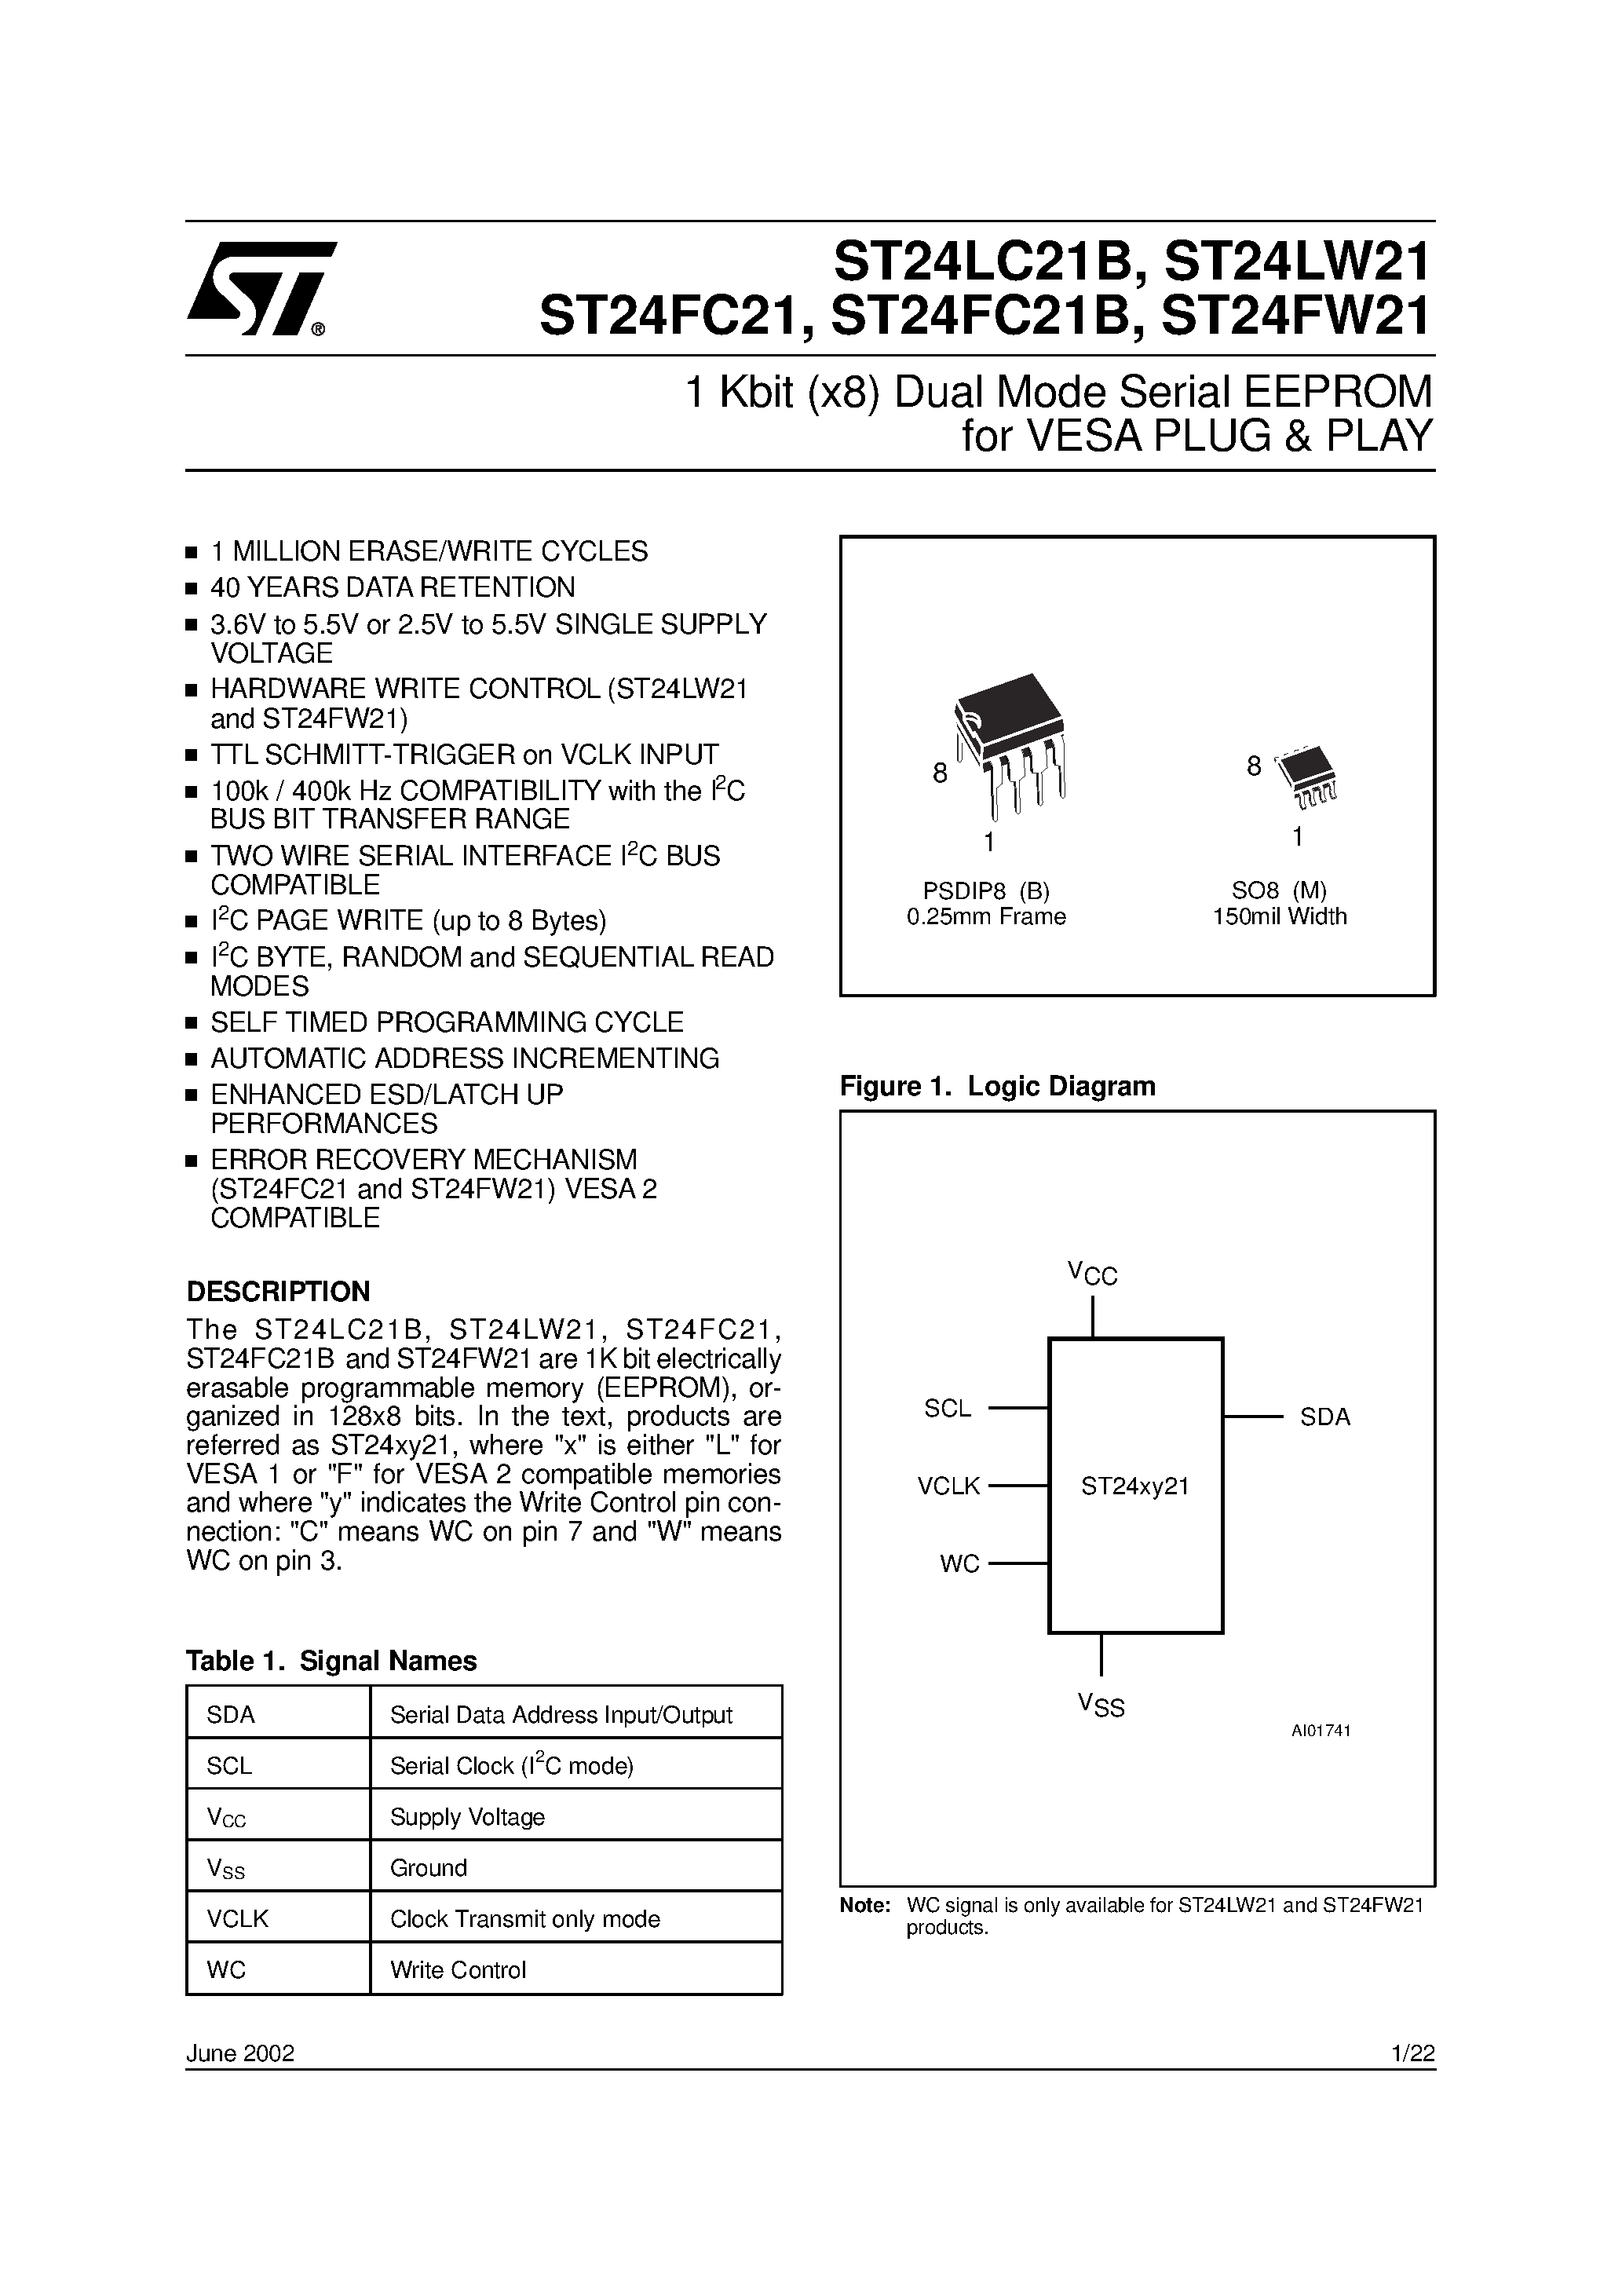 Datasheet ST24LW21 - 1 Kbit x8 Dual Mode Serial EEPROM for VESA PLUG & PLAY page 1